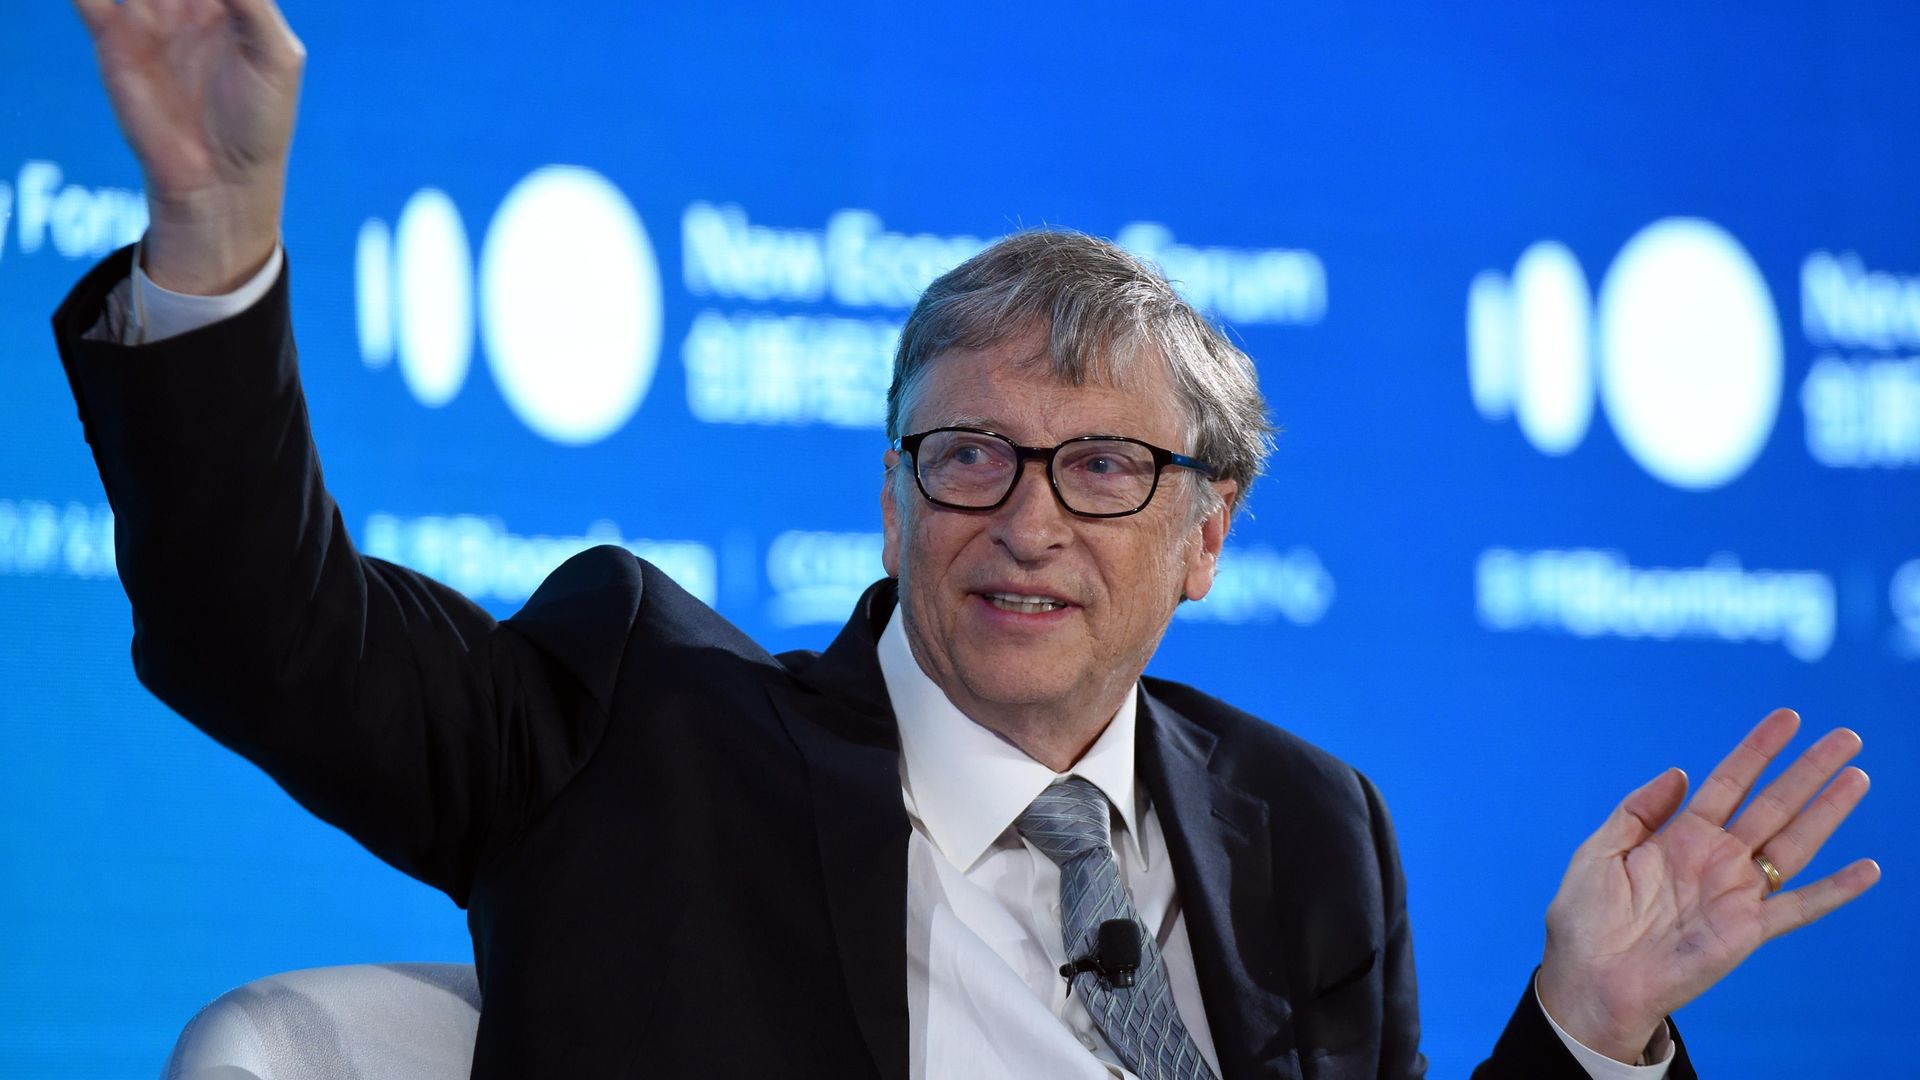 Bill & Melinda Gates Foundation Chairman Bill Gates speaks during 2019 New Economy Forum at China Center for International Economic Exchanges